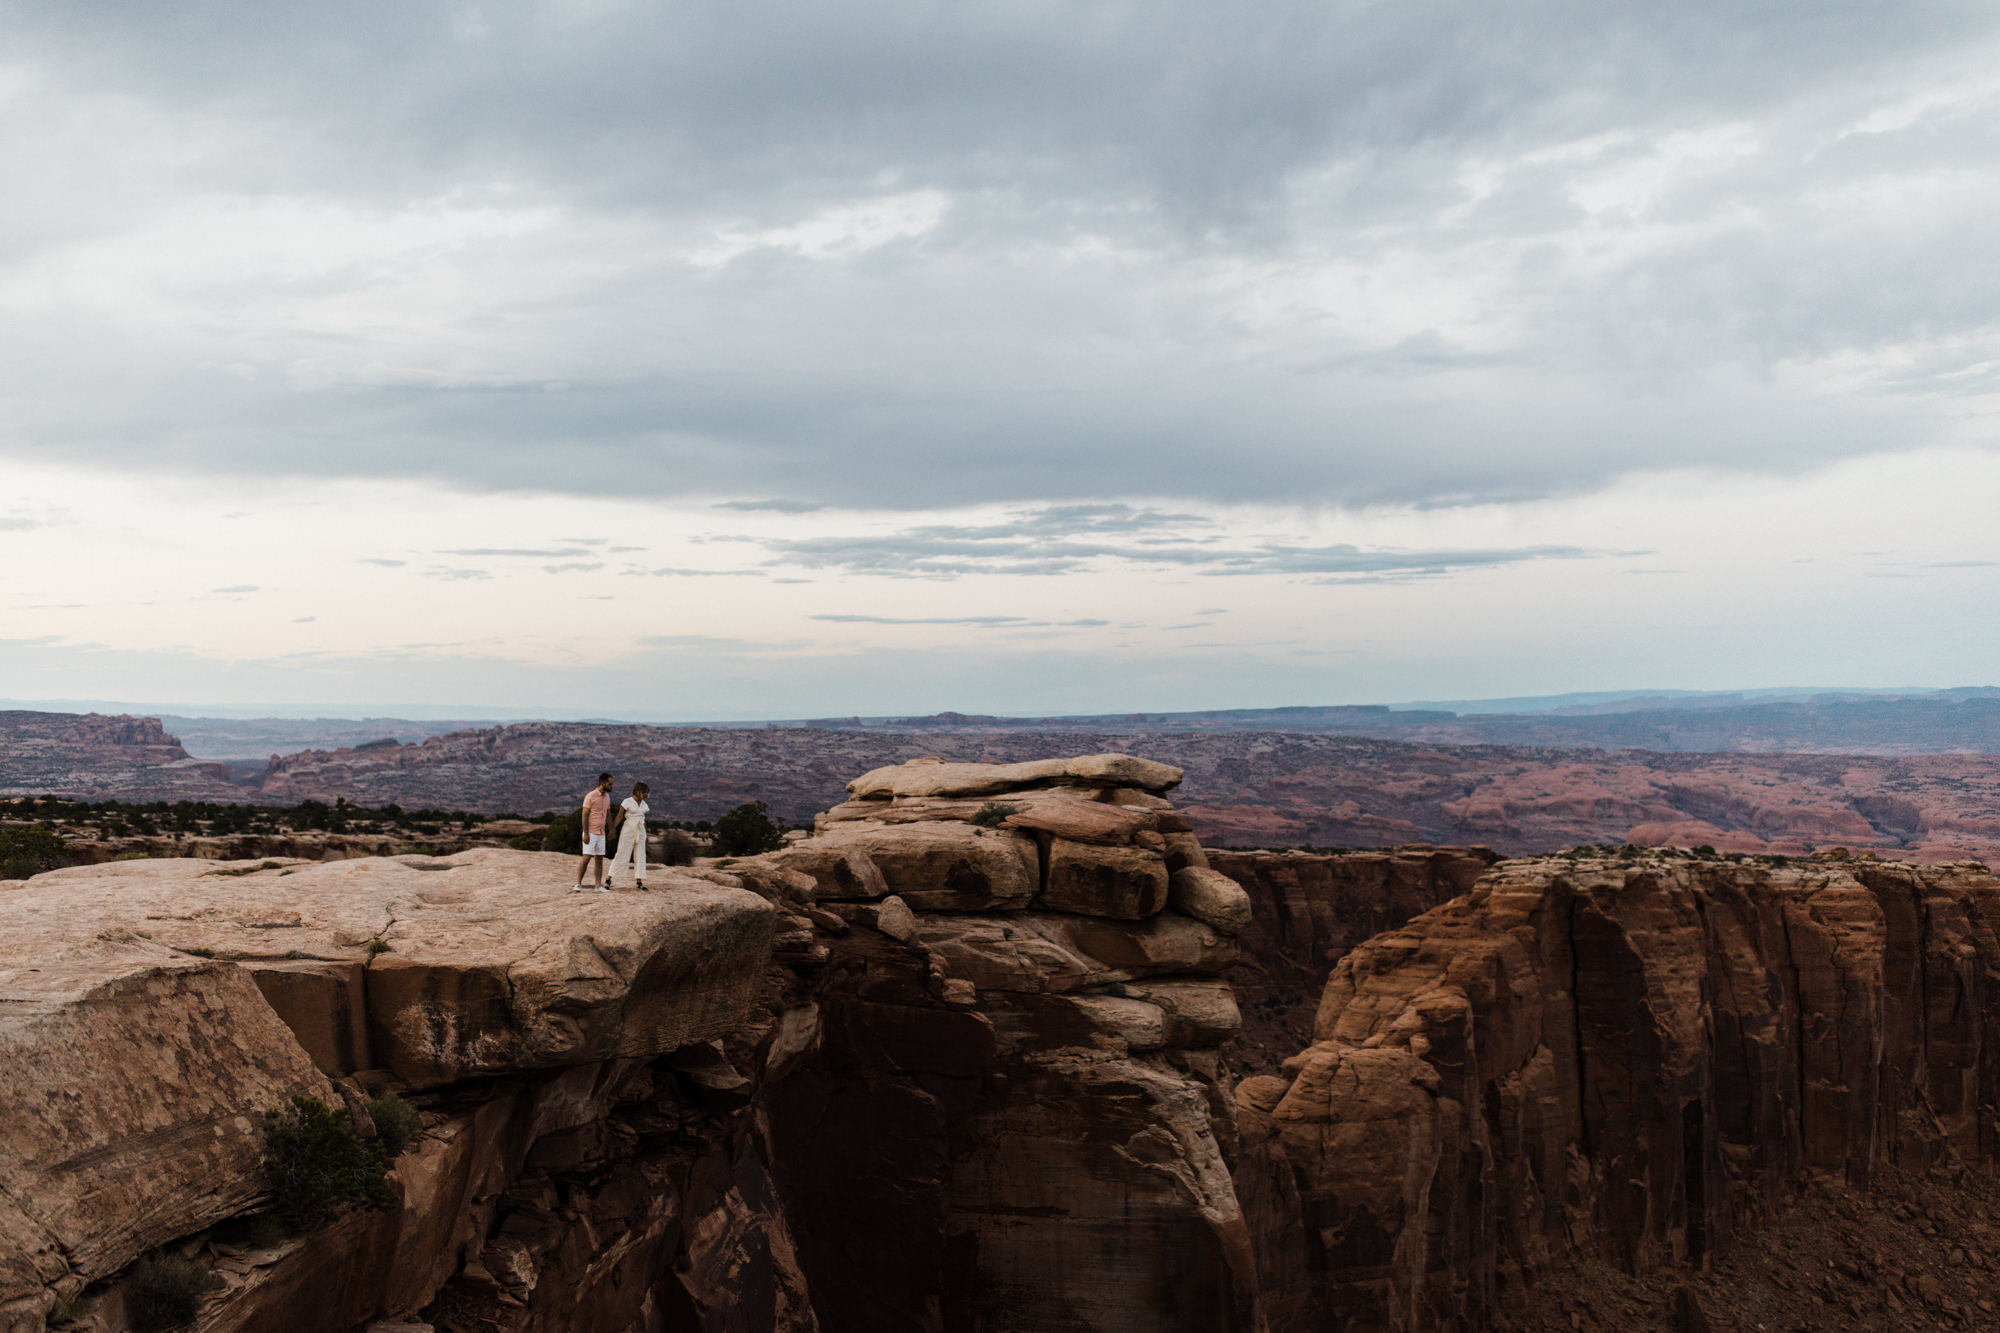 moab, utah adventurous elopement | utah intimate wedding photographer | jumpsuit bride | desert wedding inspiration | the hearnes adventure photography